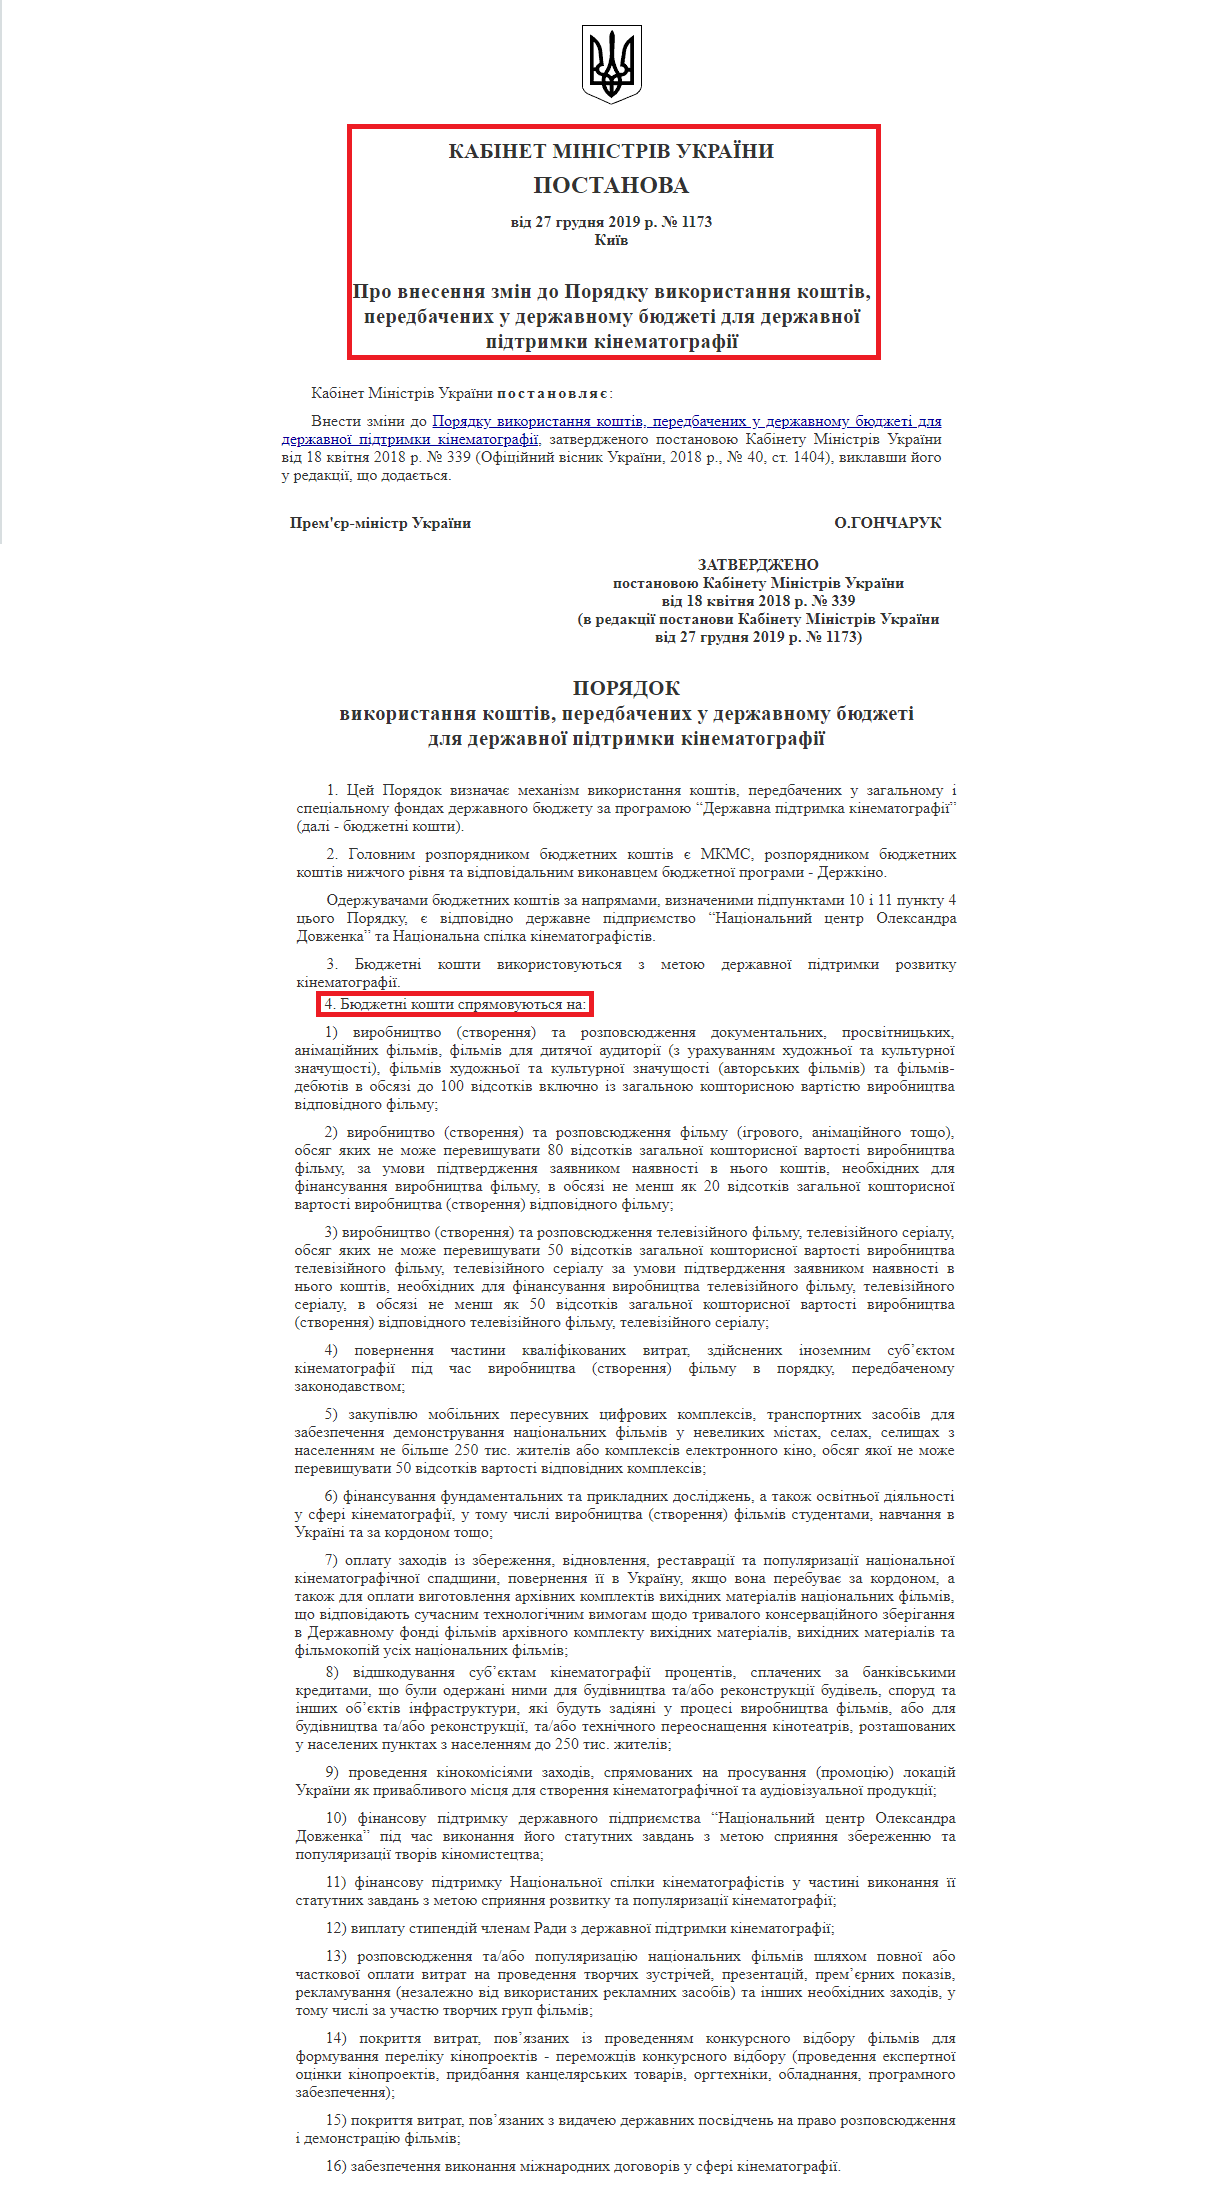 https://zakon.rada.gov.ua/laws/show/1173-2019-%D0%BF#Text